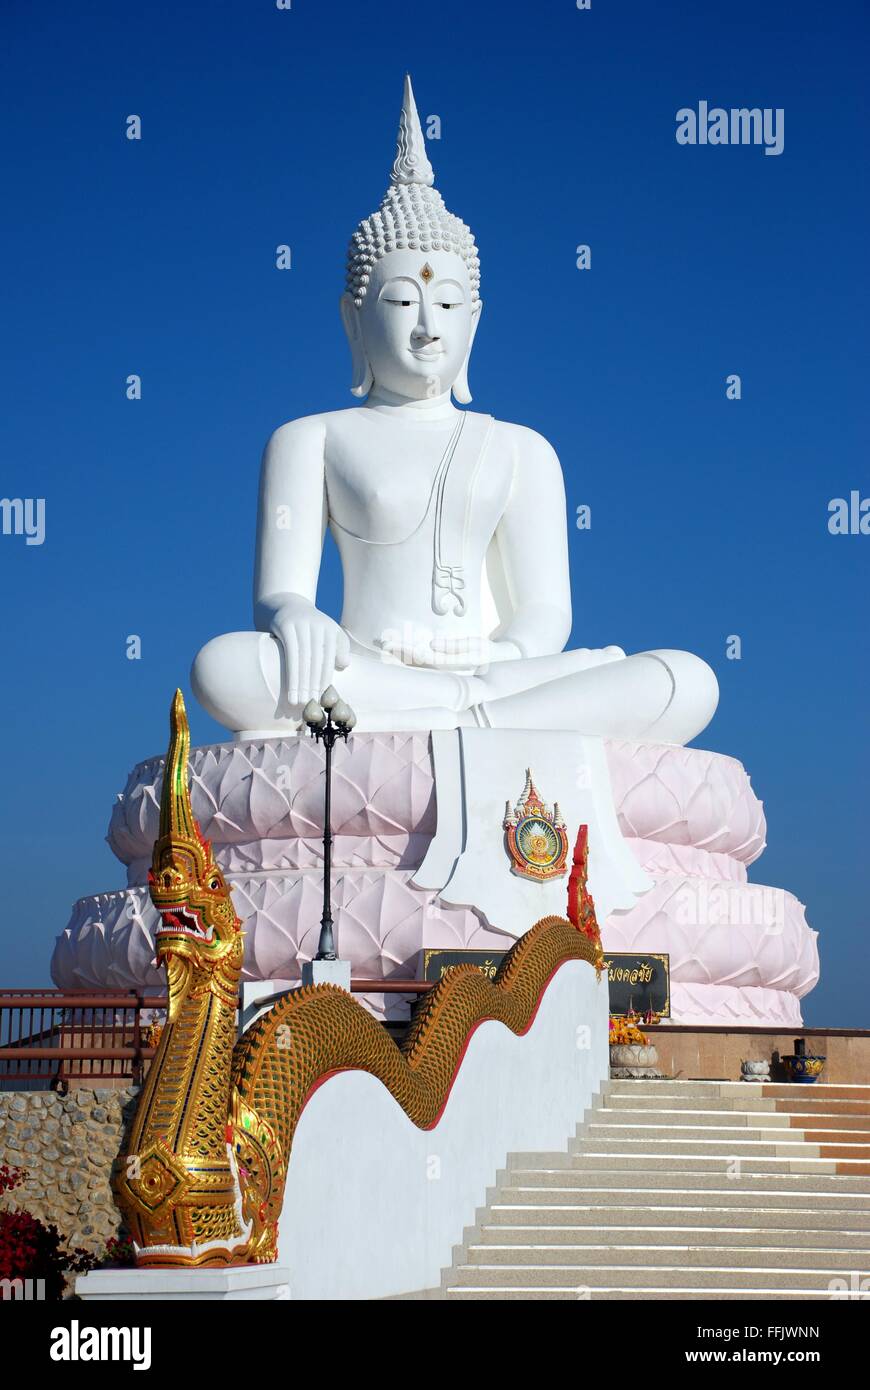 Big white buddha statue with serpent king on stairs at Pasak Jolasid Dam, Thailand Stock Photo